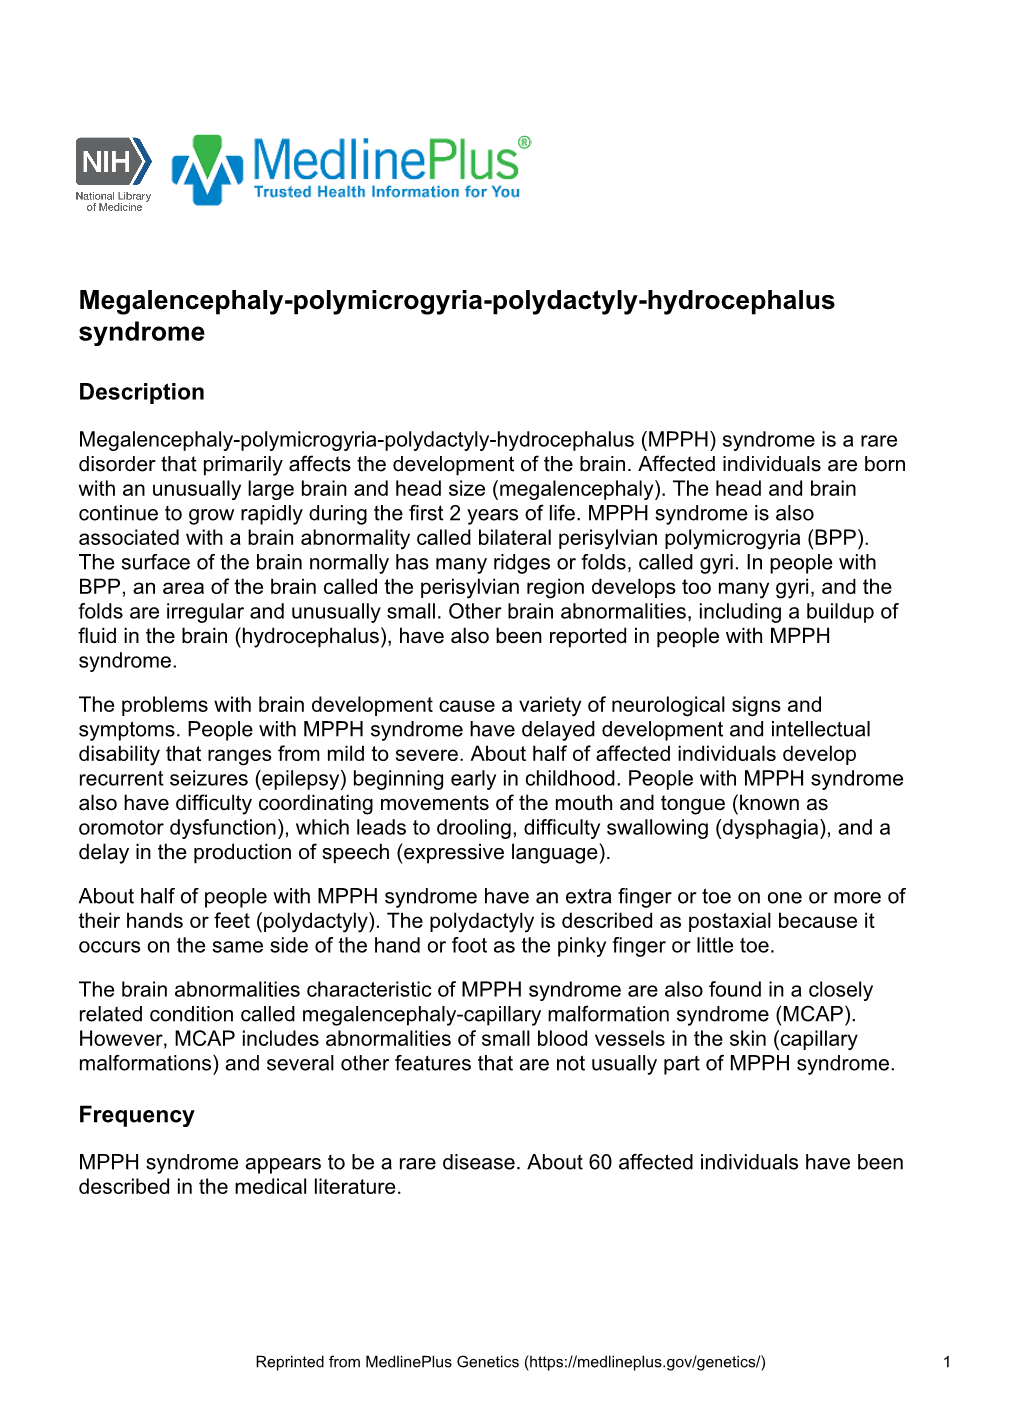 Megalencephaly-Polymicrogyria-Polydactyly-Hydrocephalus Syndrome